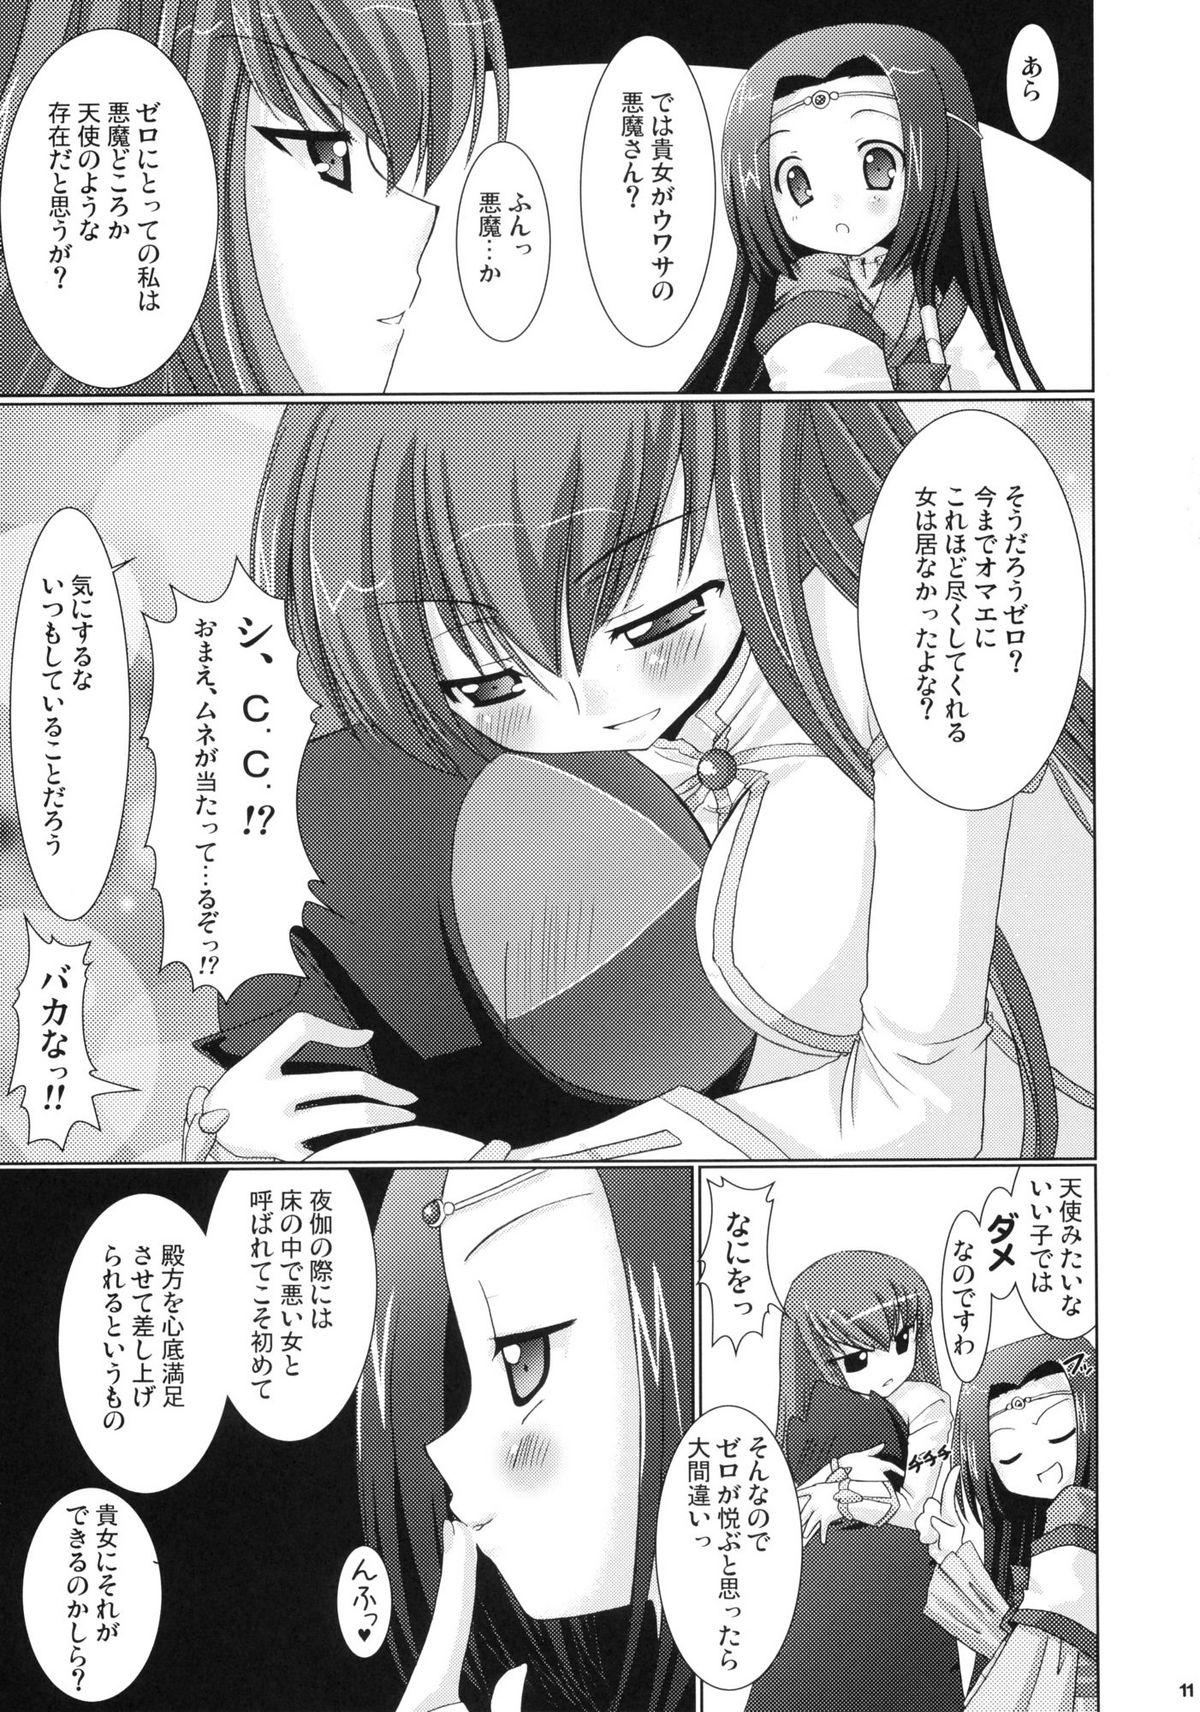 Ruiva Kouhime Kyouhime - Code geass Anime - Page 11